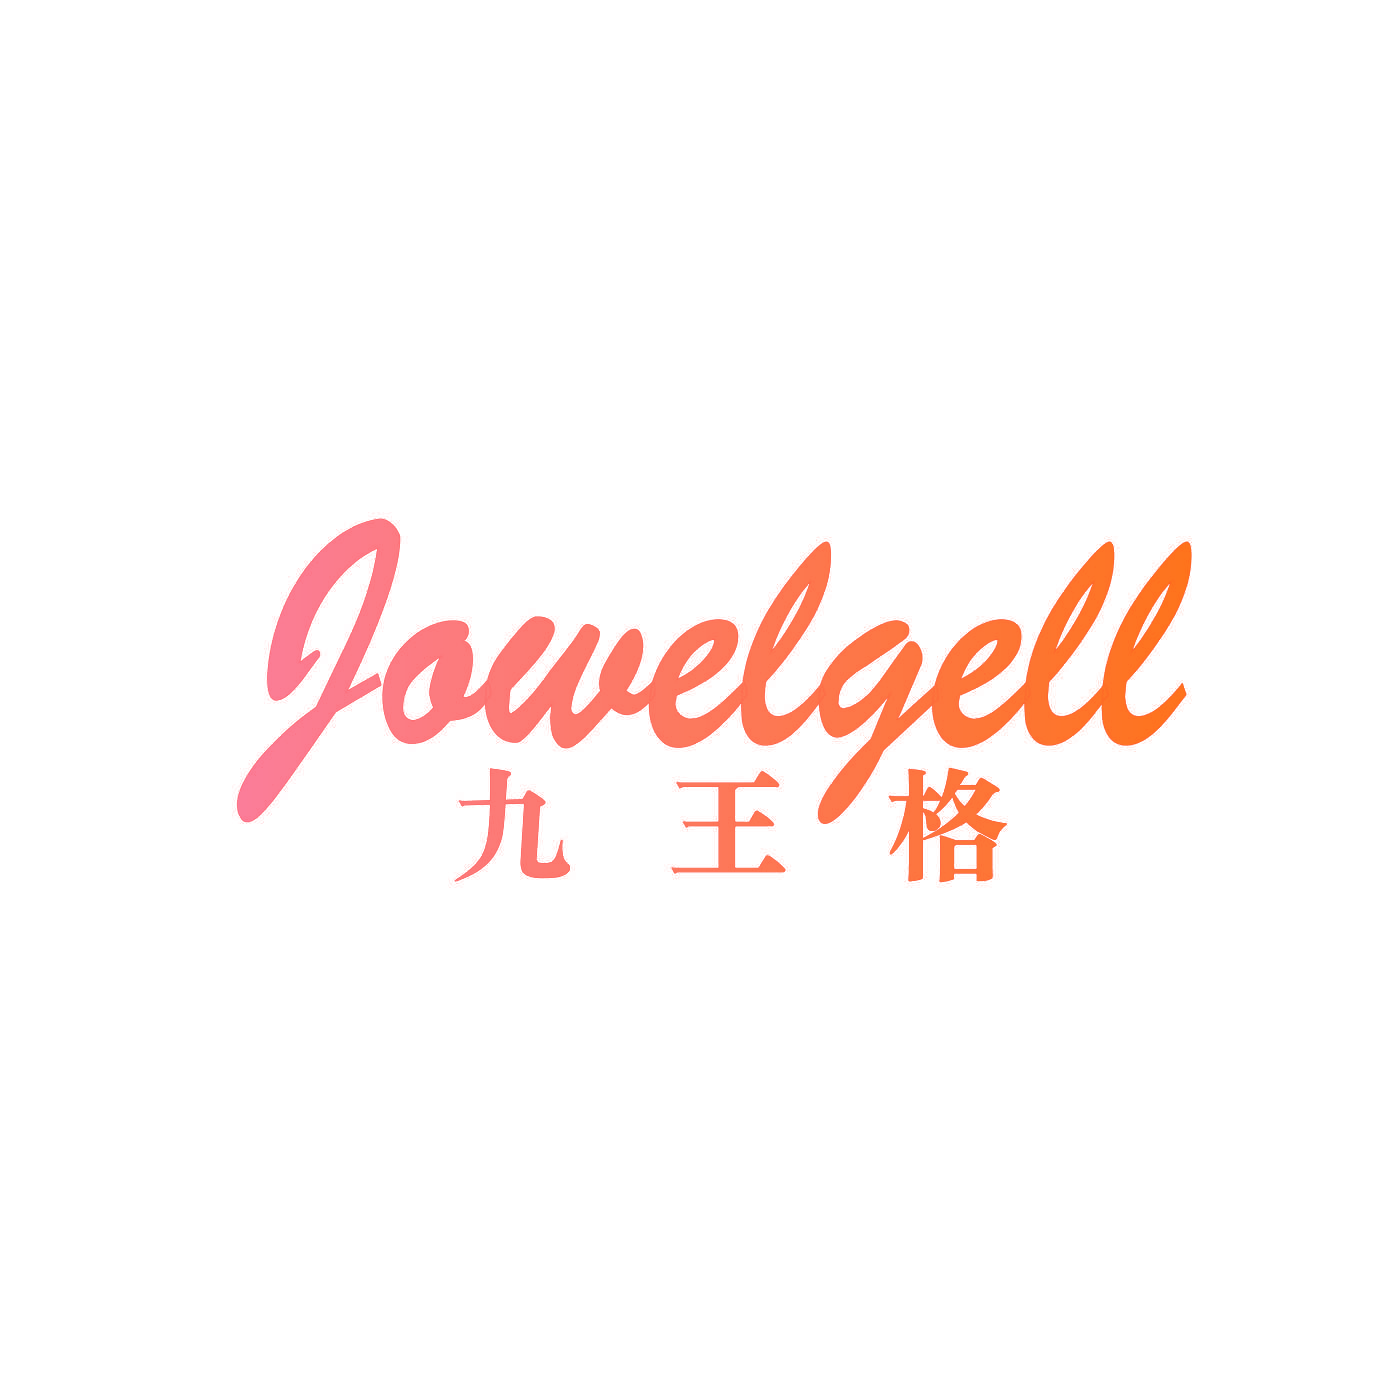 JOWELGELL 九王格